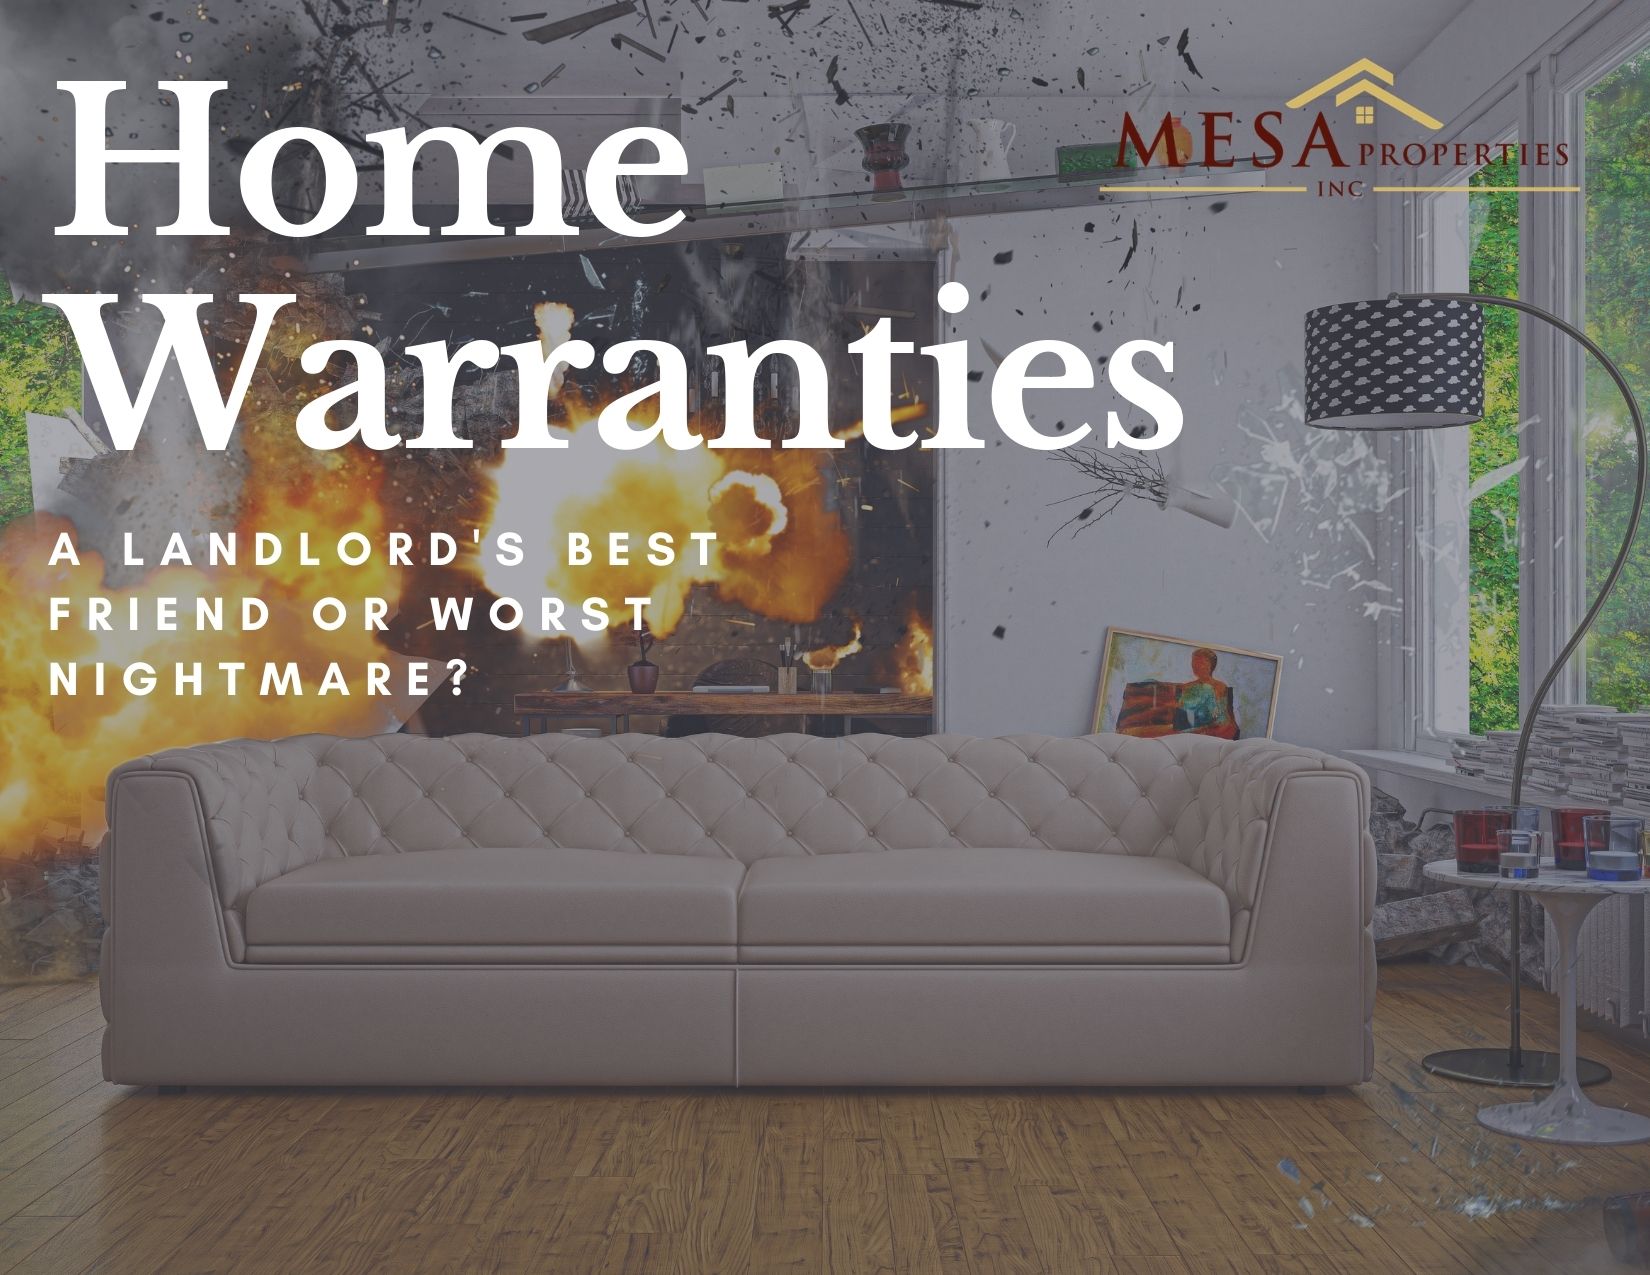 Home Warranties - A Landlord's Best Friend Or Worst Nightmare?